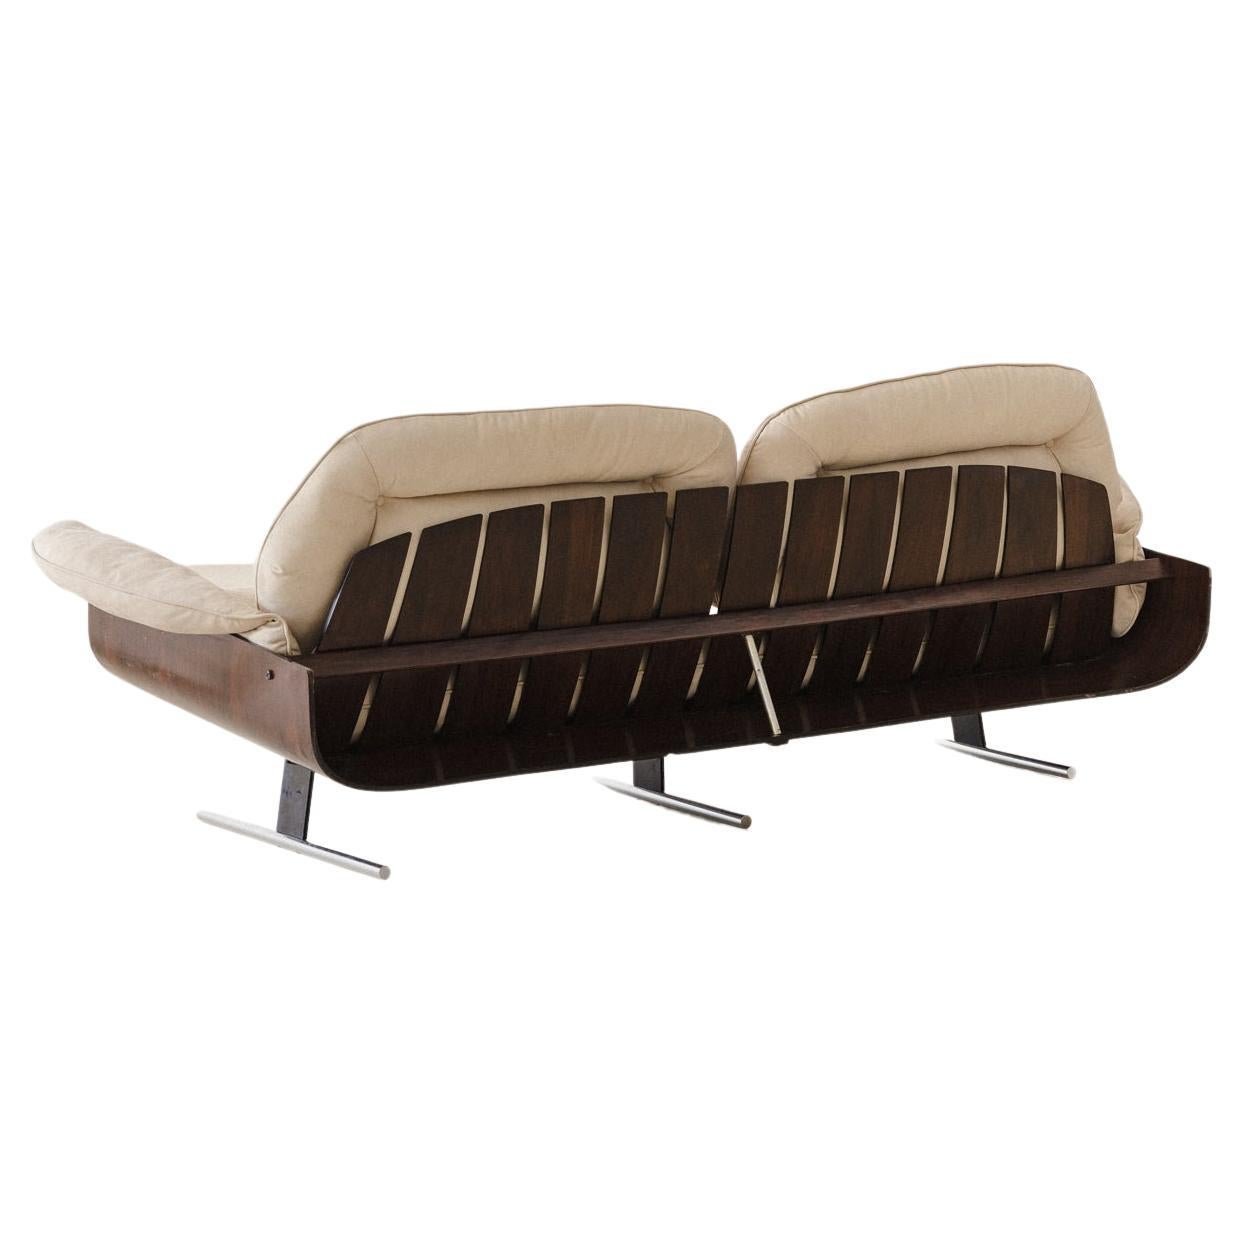 Midcentury Modern Presidential Sofa by Brazilian Designer Jorge Zalszupin, 1959